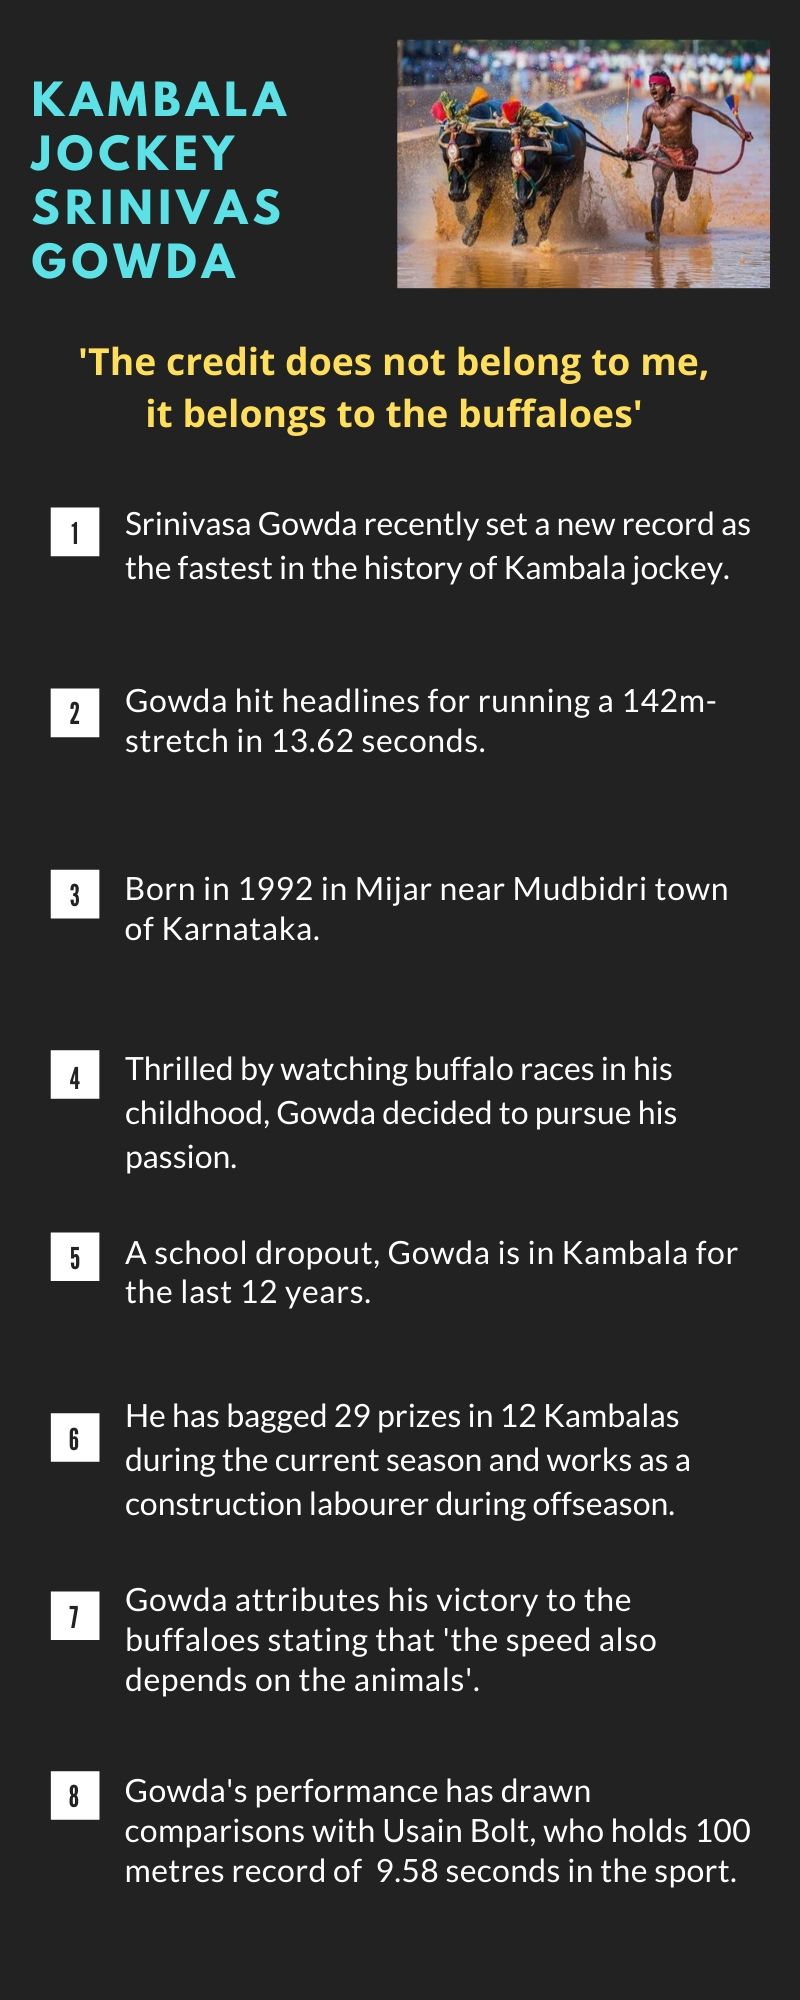 Kambala jockey Srinivas Gowda's journey